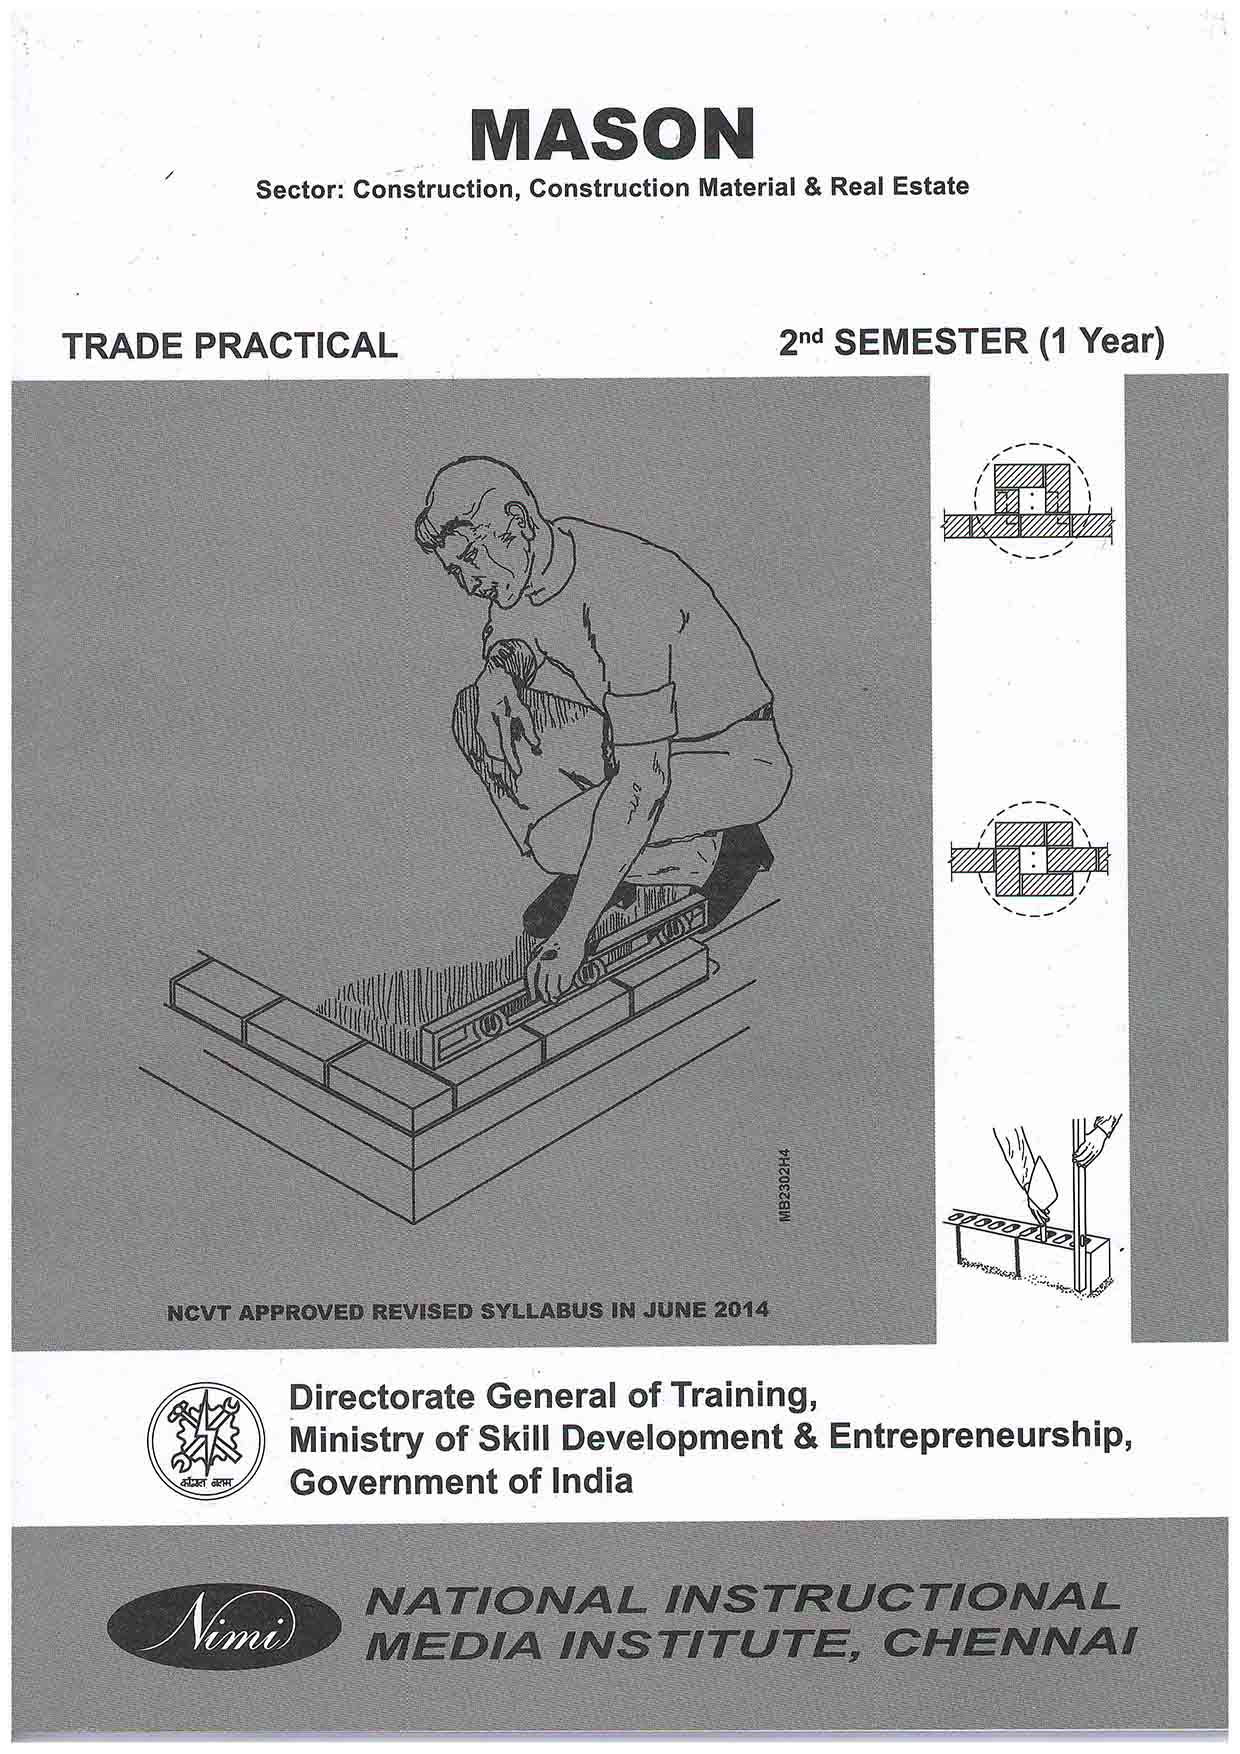 Mason (Construction, Construction Material & Real Estate) -Trade Practical- 2nd Semester 1 Year